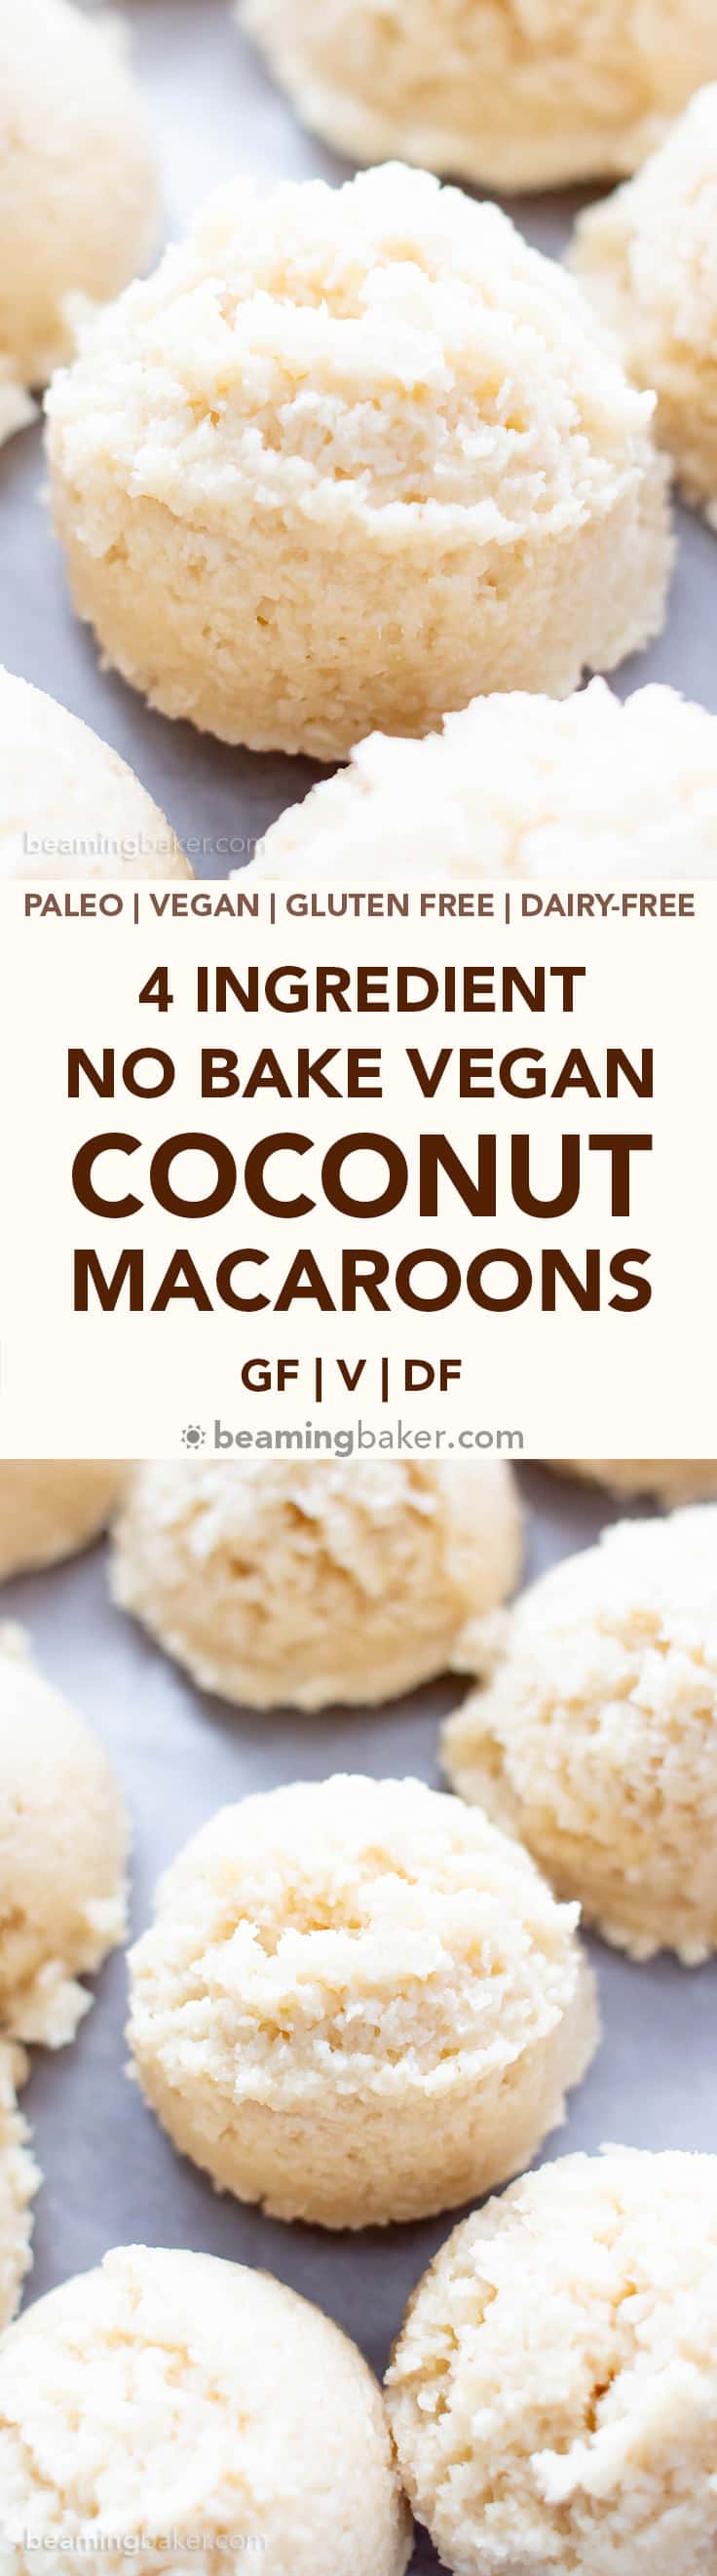 4 Ingredient No Bake Coconut Macaroons (V, GF): a one bowl recipe for perfectly sweet no bake macaroons bursting with coconut flavor. #Paleo #Vegan #GlutenFree #DairyFree #NoBake #Dessert | Recipe on BeamingBaker.com